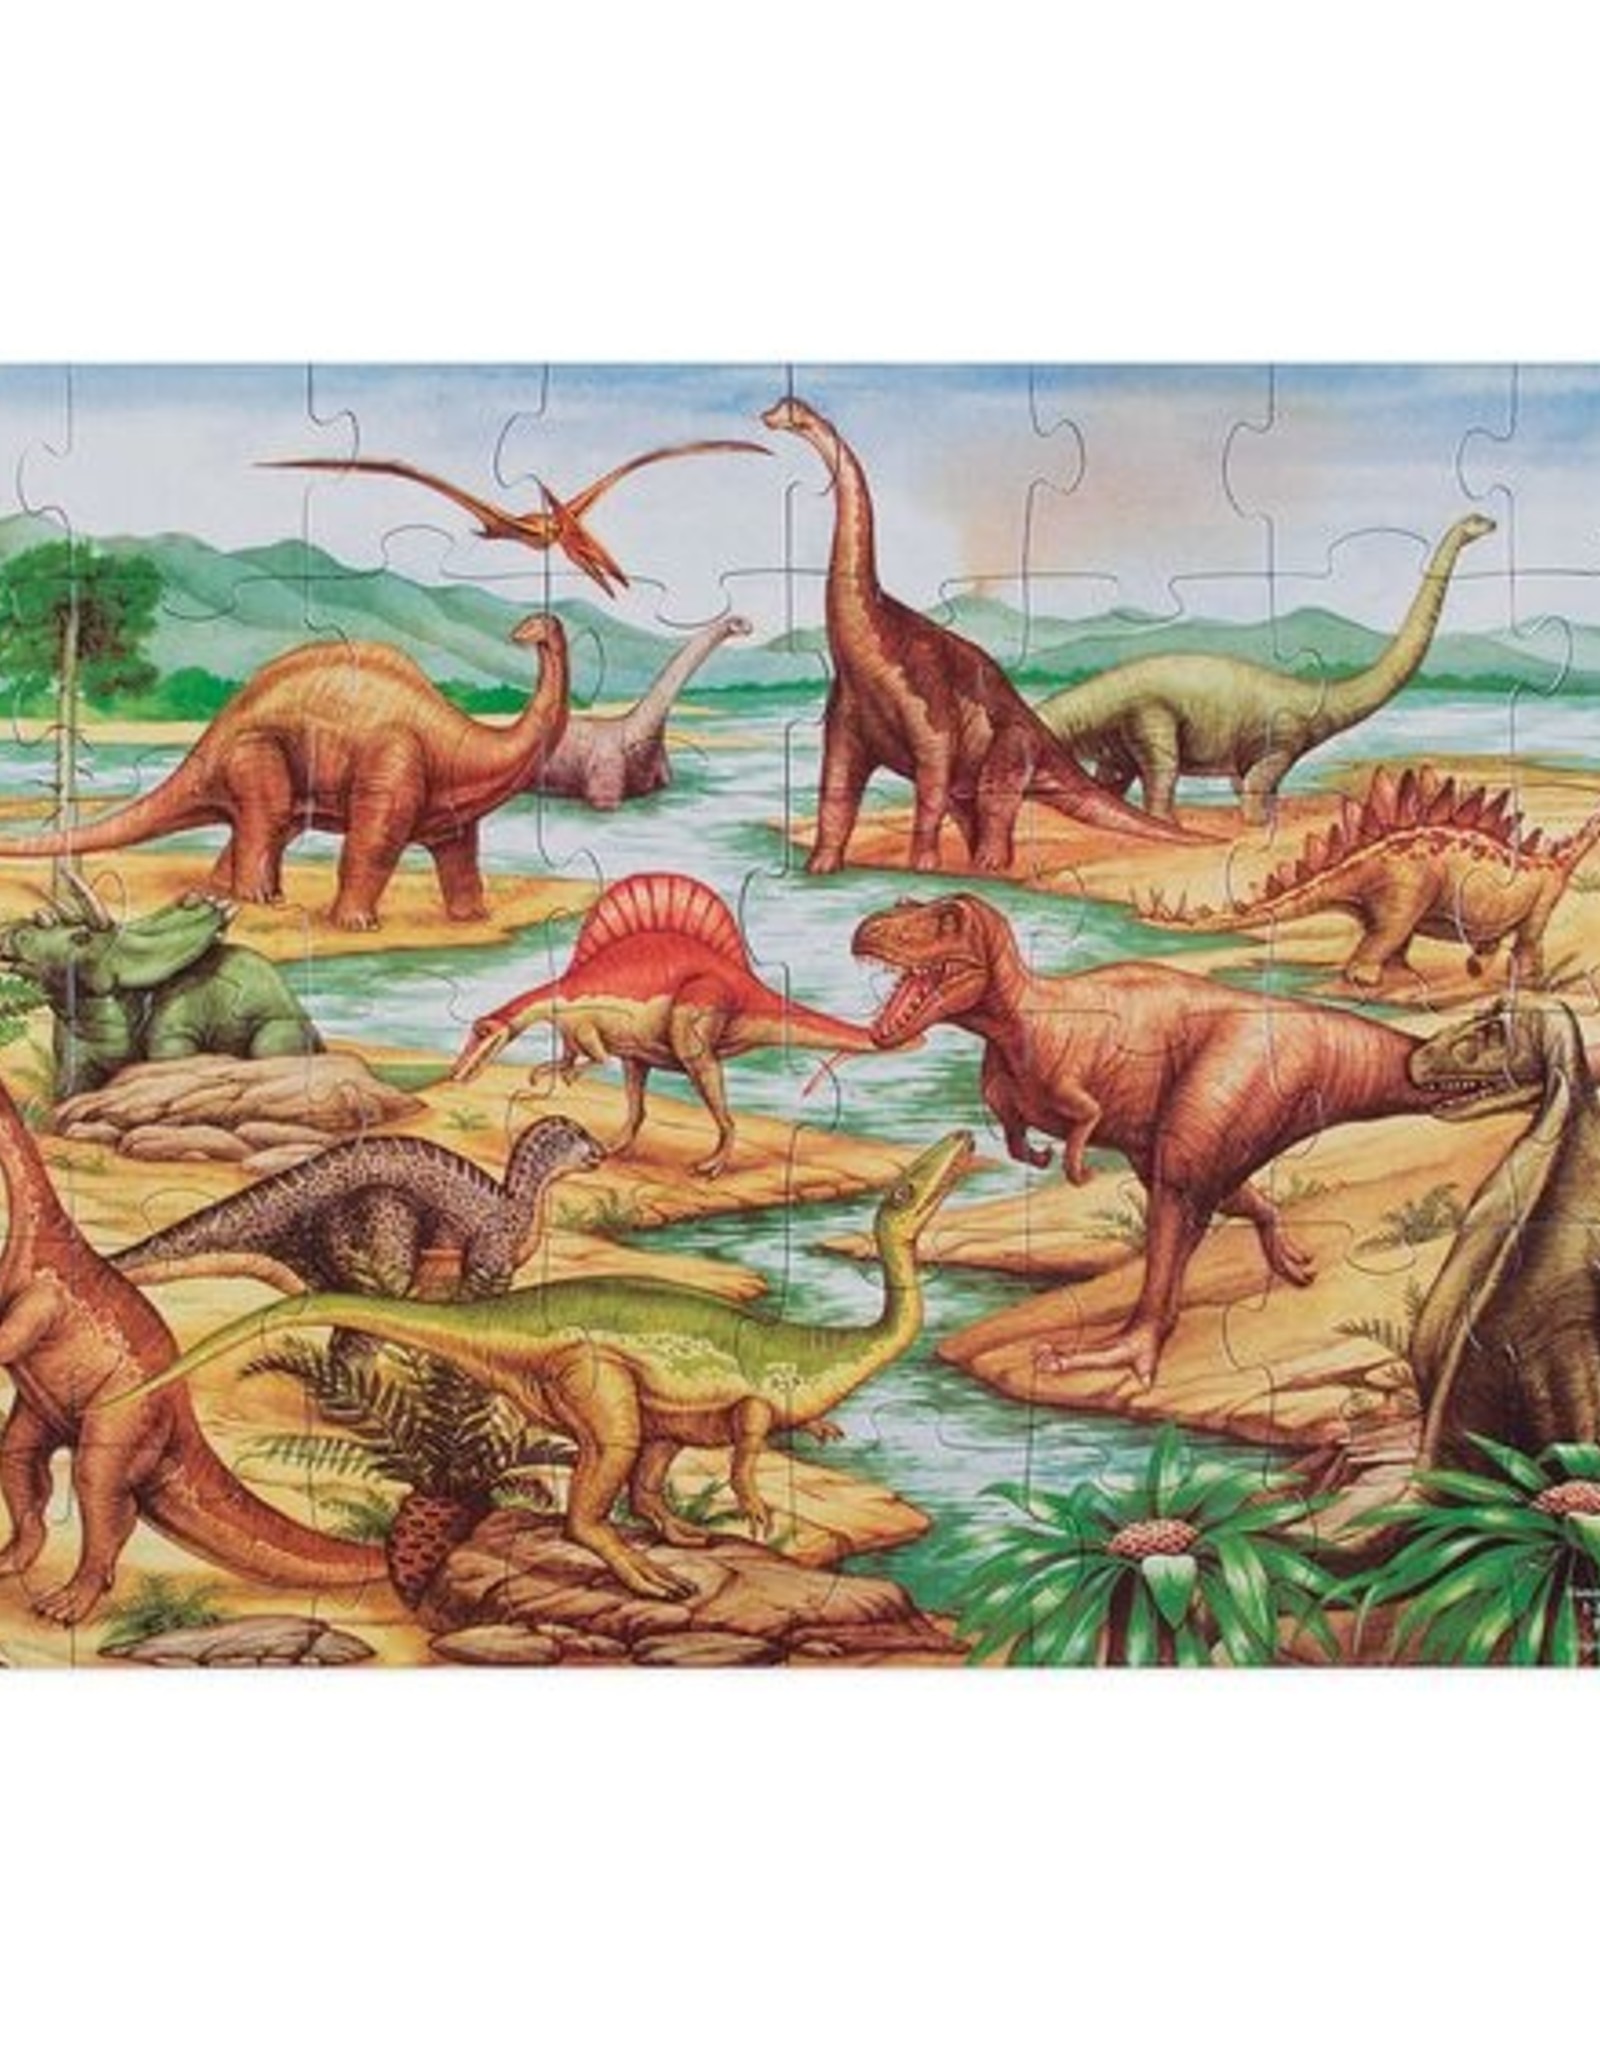 Melissa & Doug Dinosaurs Floor Puzzle  48pc